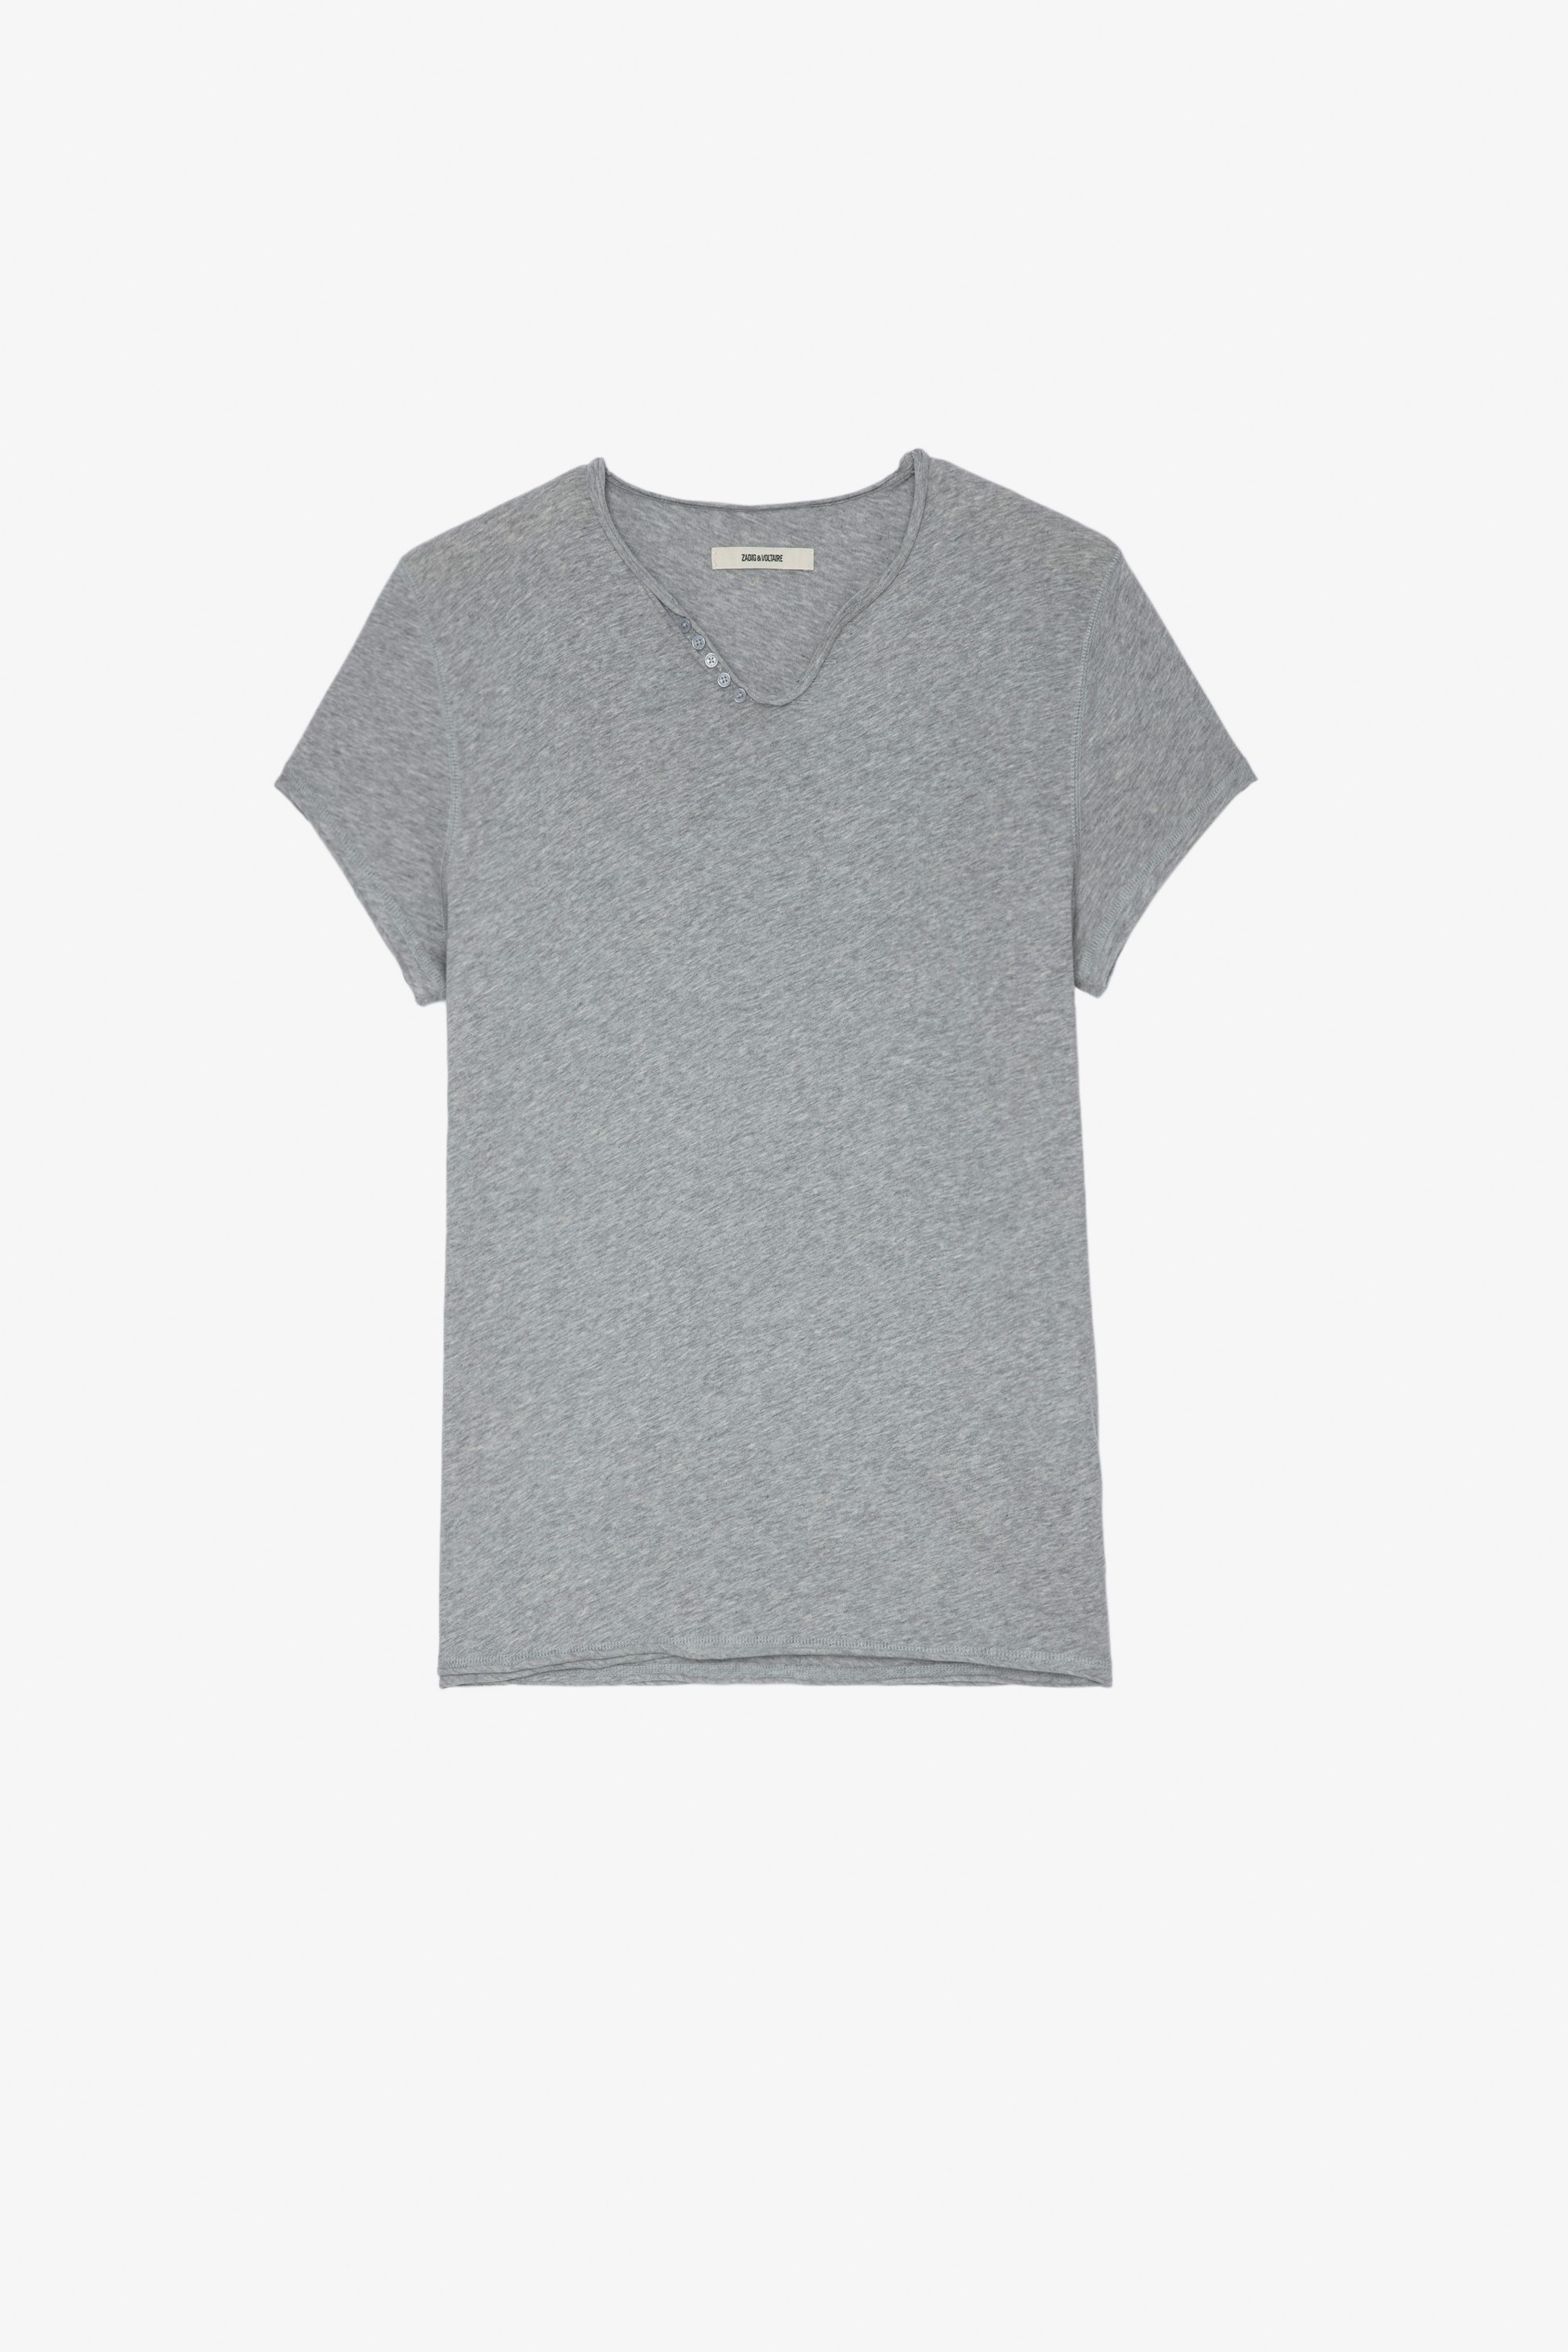 Monastir T-Shirt Men's grey marl cotton Henley T-shirt with Jormi "Voltaire" signature on the back